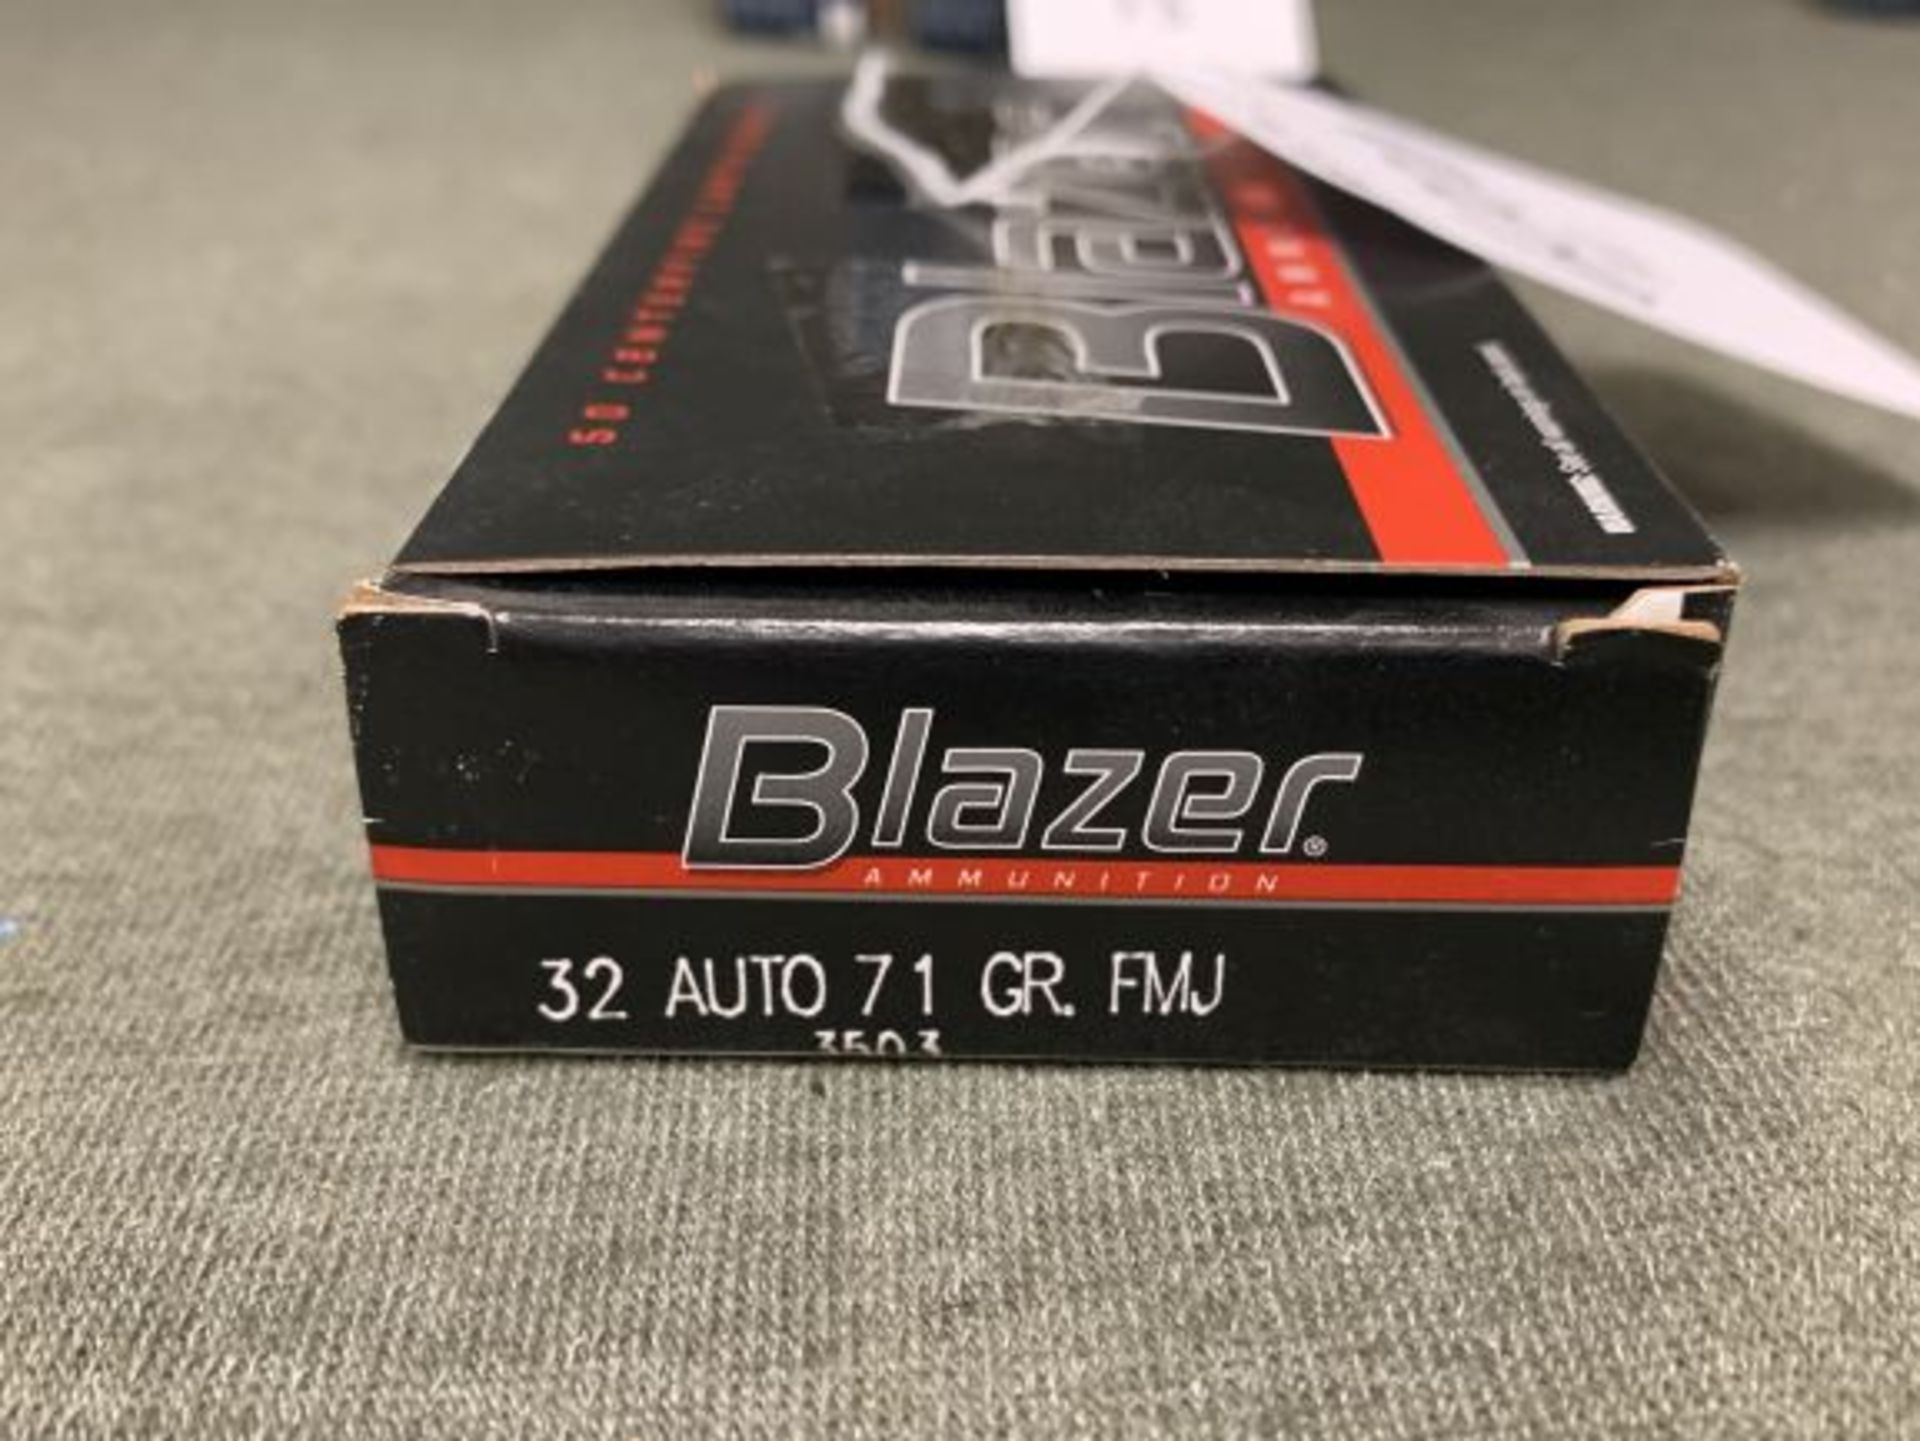 600D. Blazer .32 Auto, 71gr FMJ, 50 Rnd Box (1x the Money) - Image 2 of 2